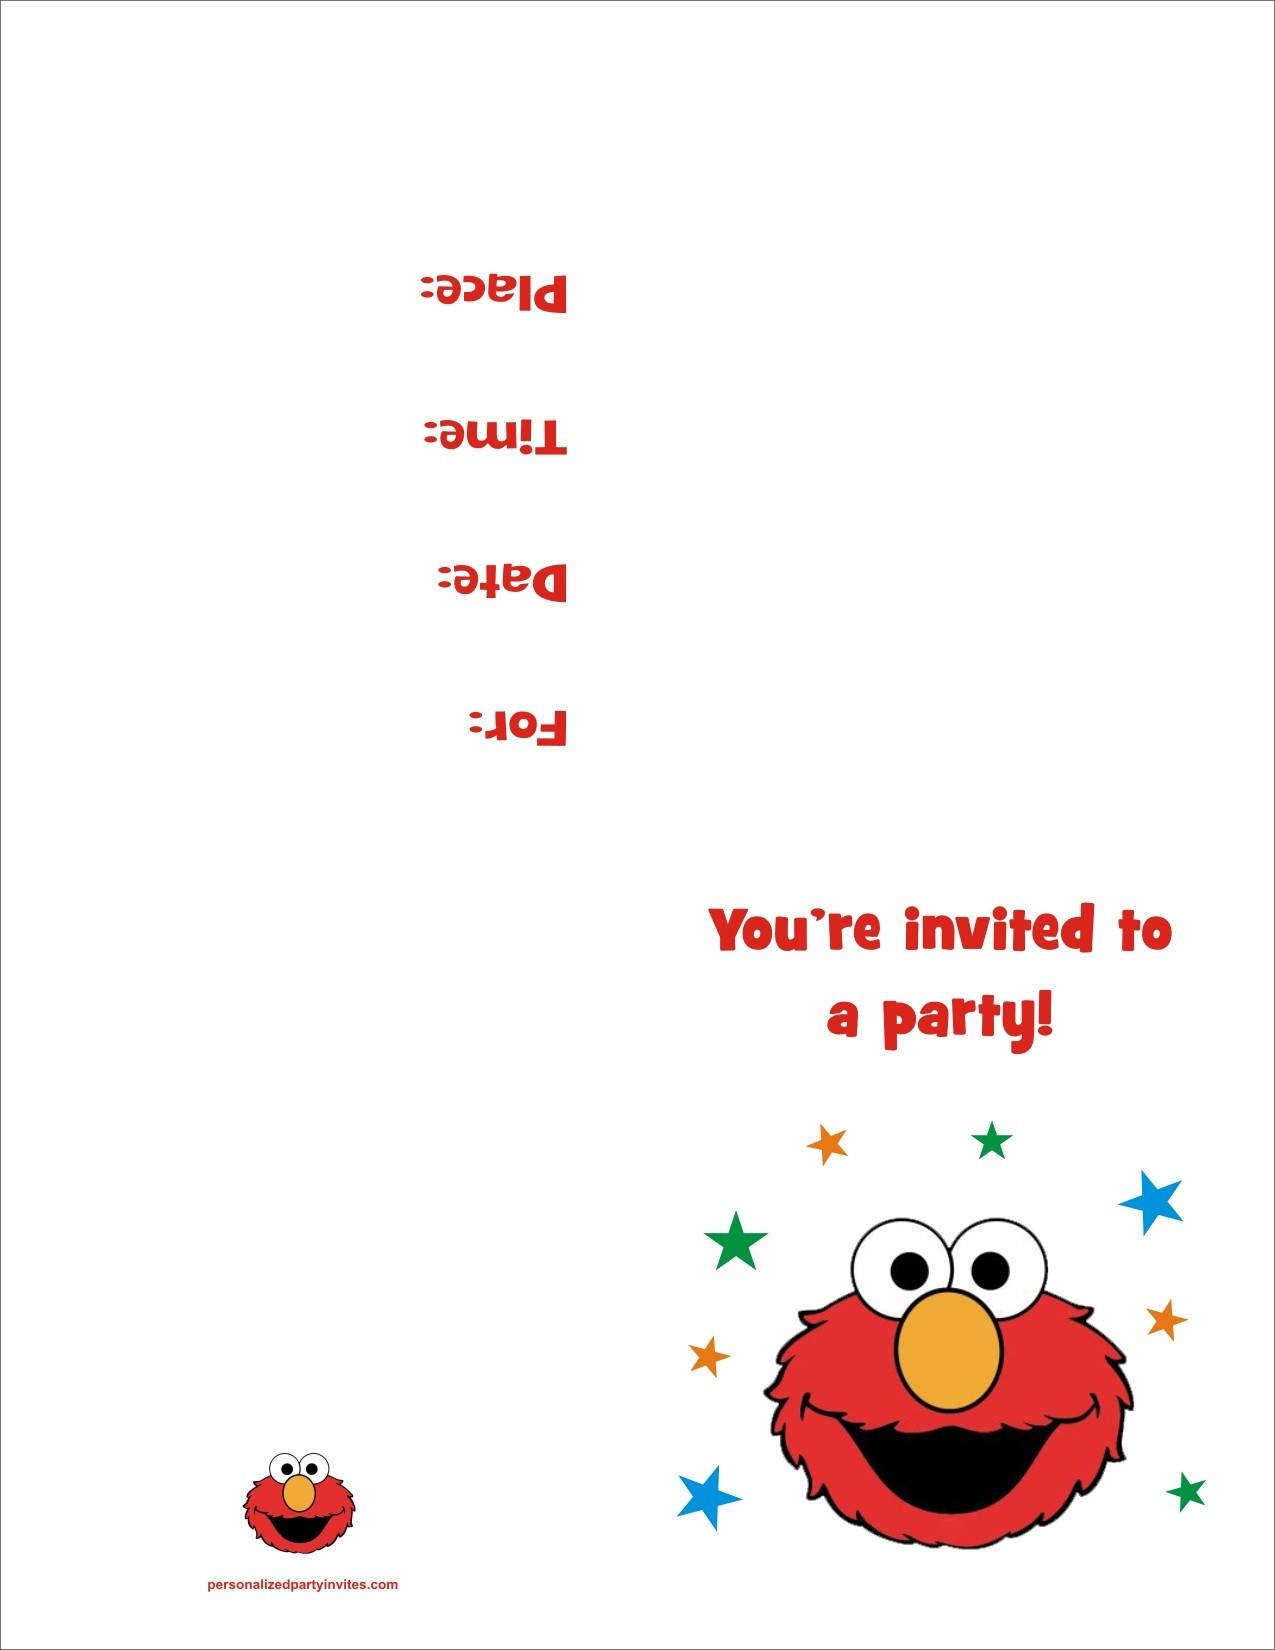 Free Printable Birthday Invitation
 Elmo FREE Printable Birthday Party Invitation Personalized